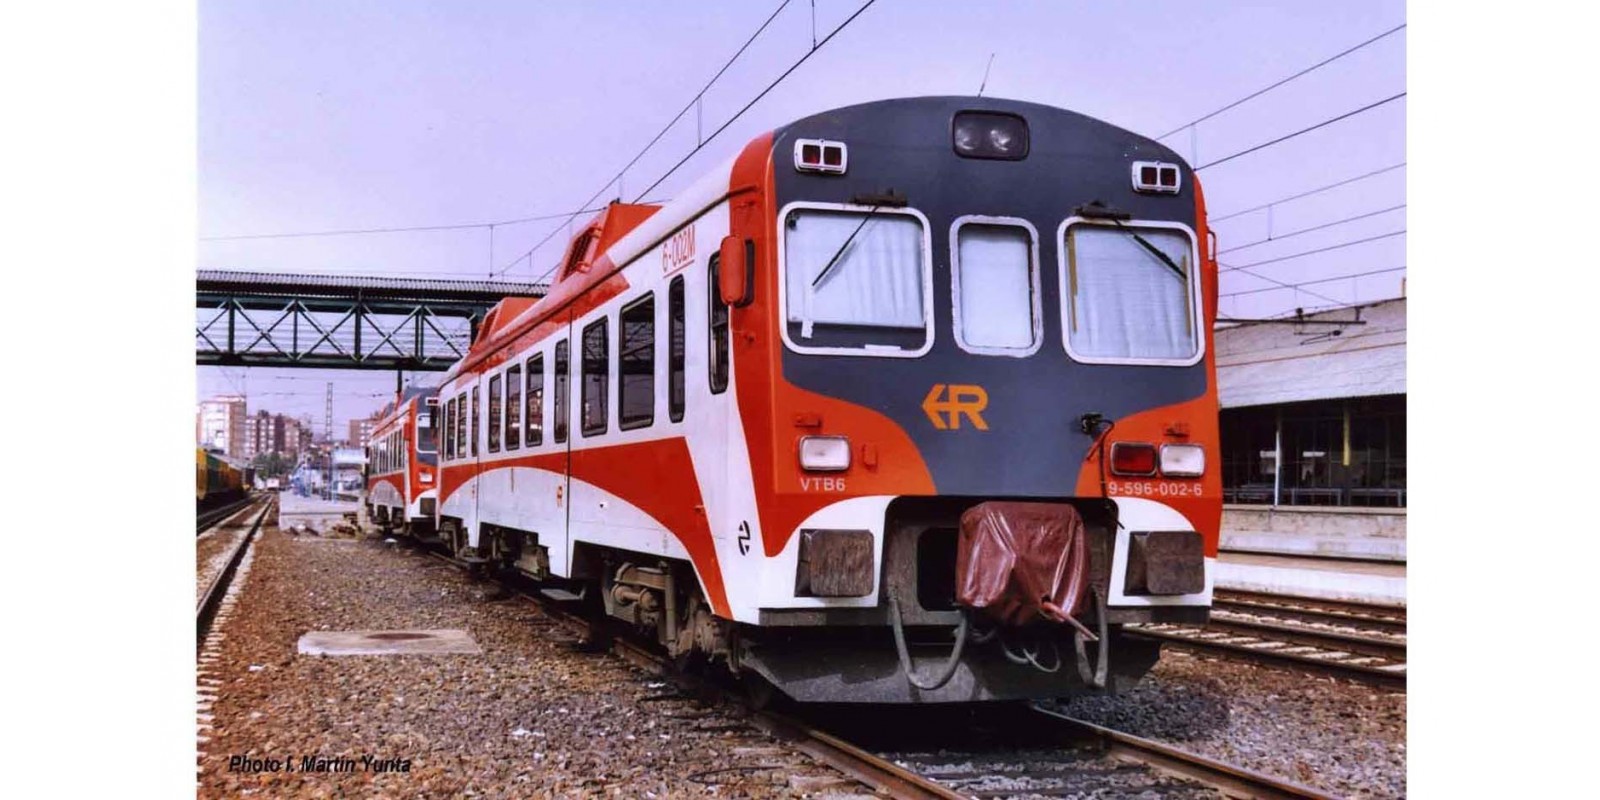 ET2502B RENFE, diesel railcar class 596 "Regionales R2", 9-596-001-8, period V